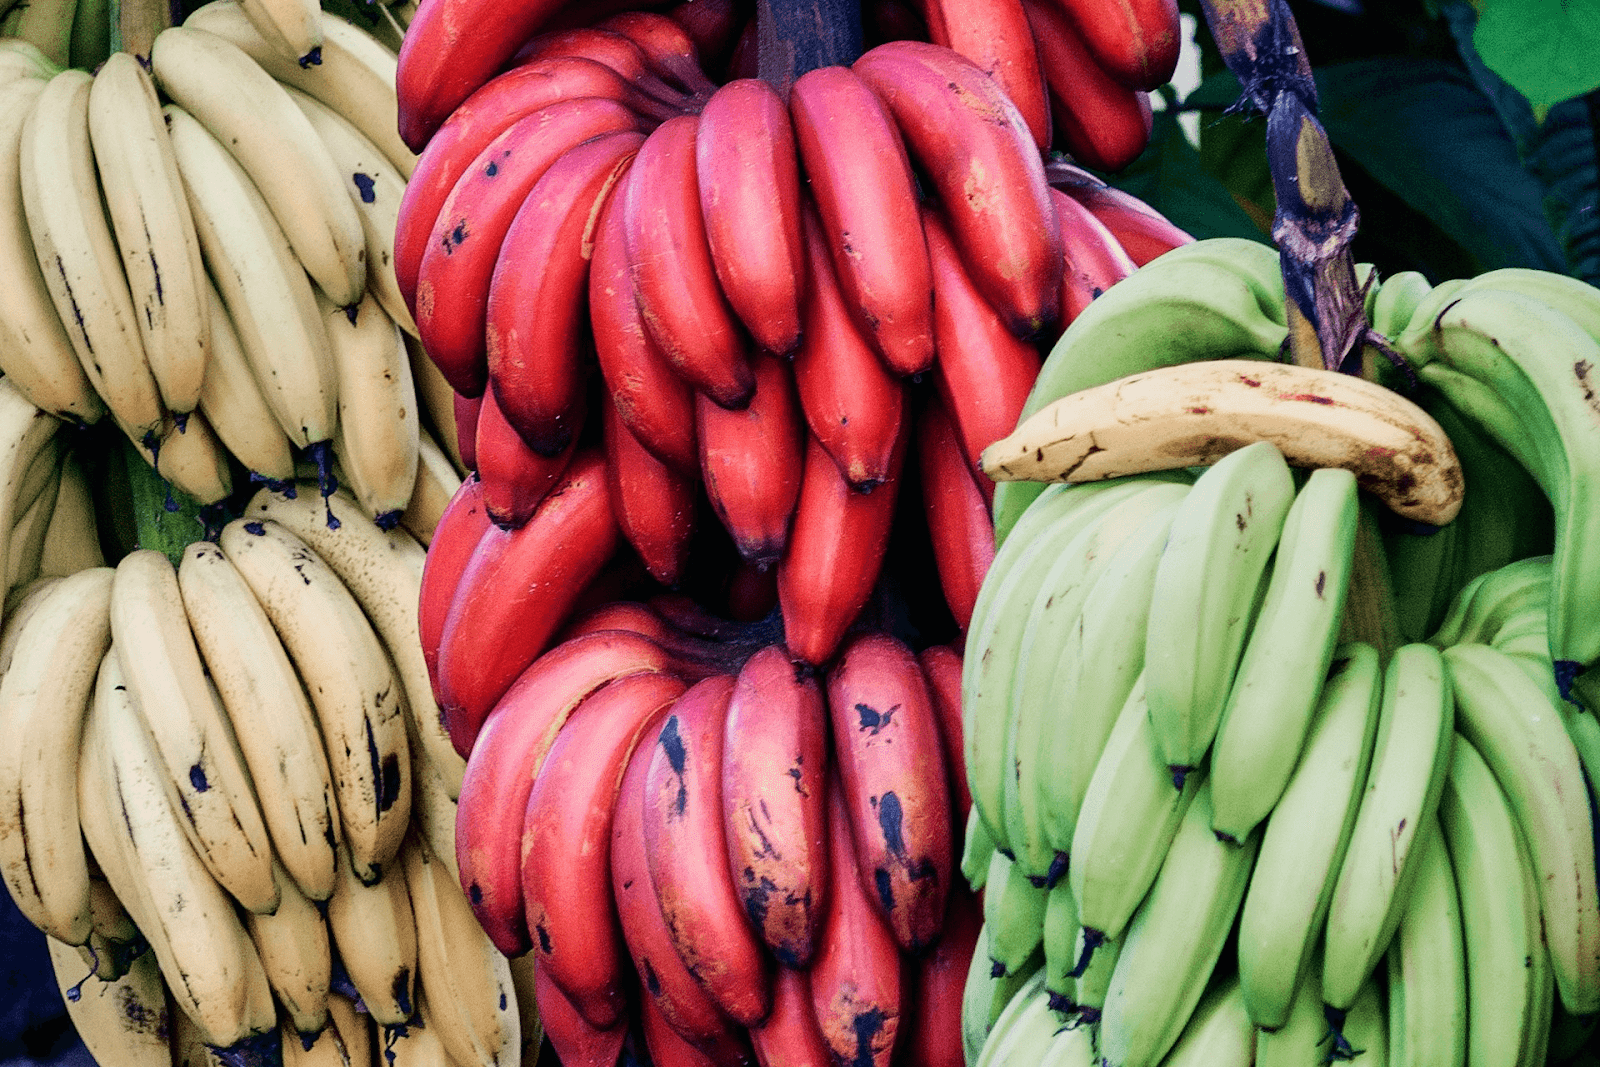 calories in a banana - varieties of banana